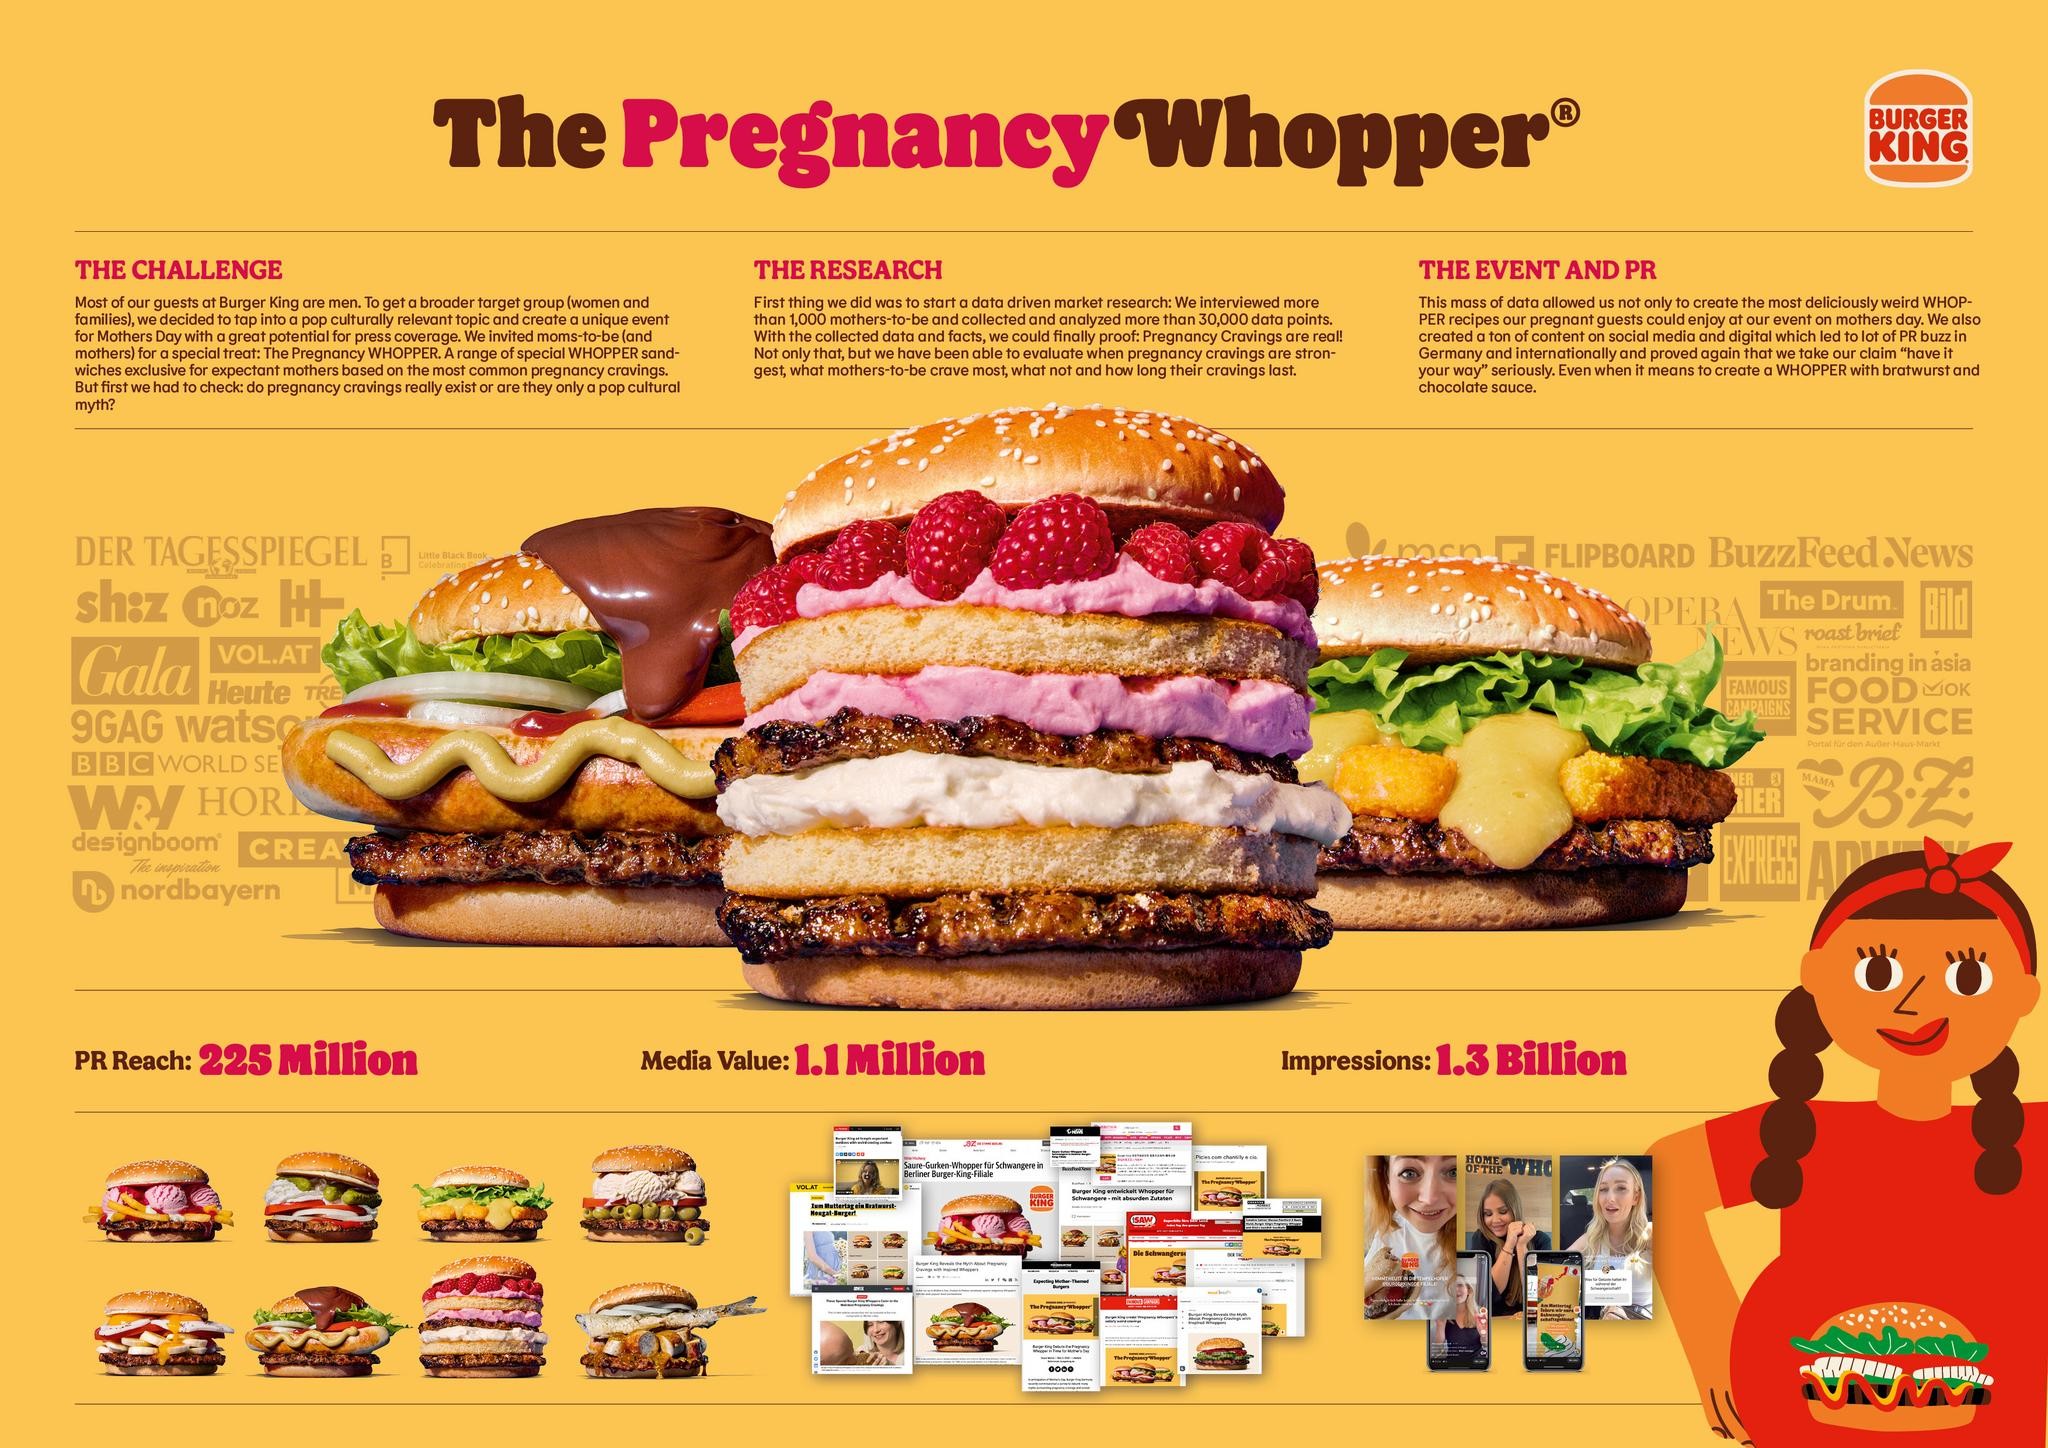 "Pregnancy-Whopper"